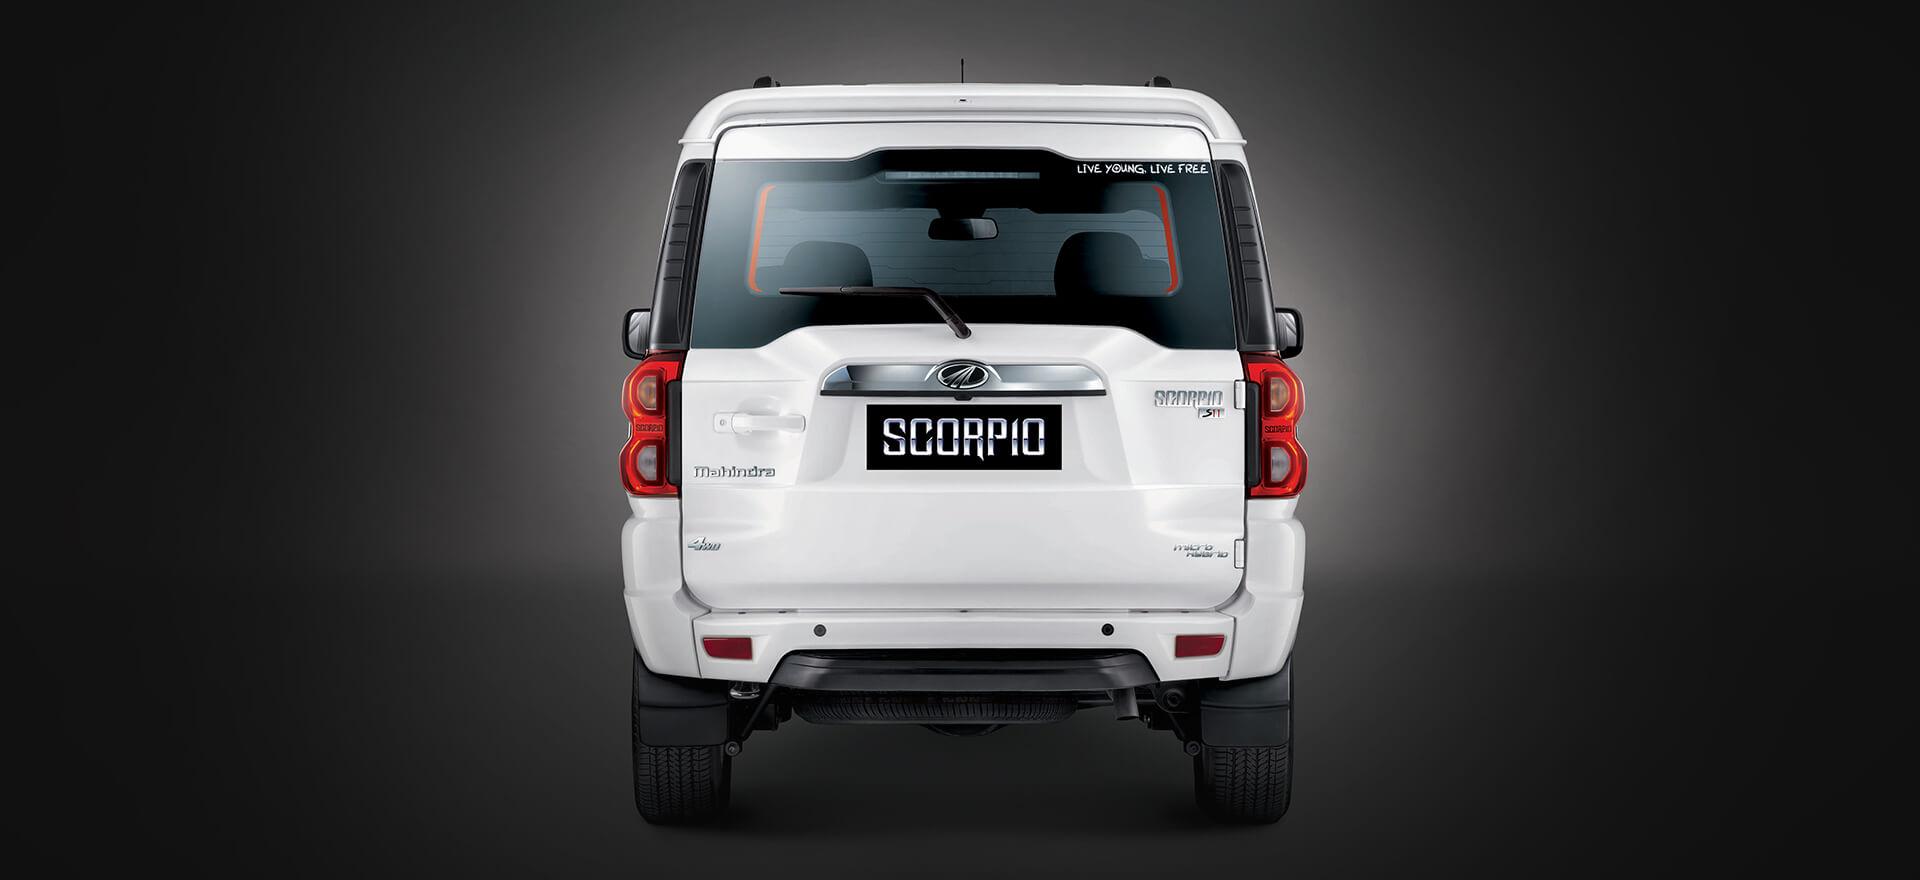 New All Powerful Scorpio. Scorpio SUV in India